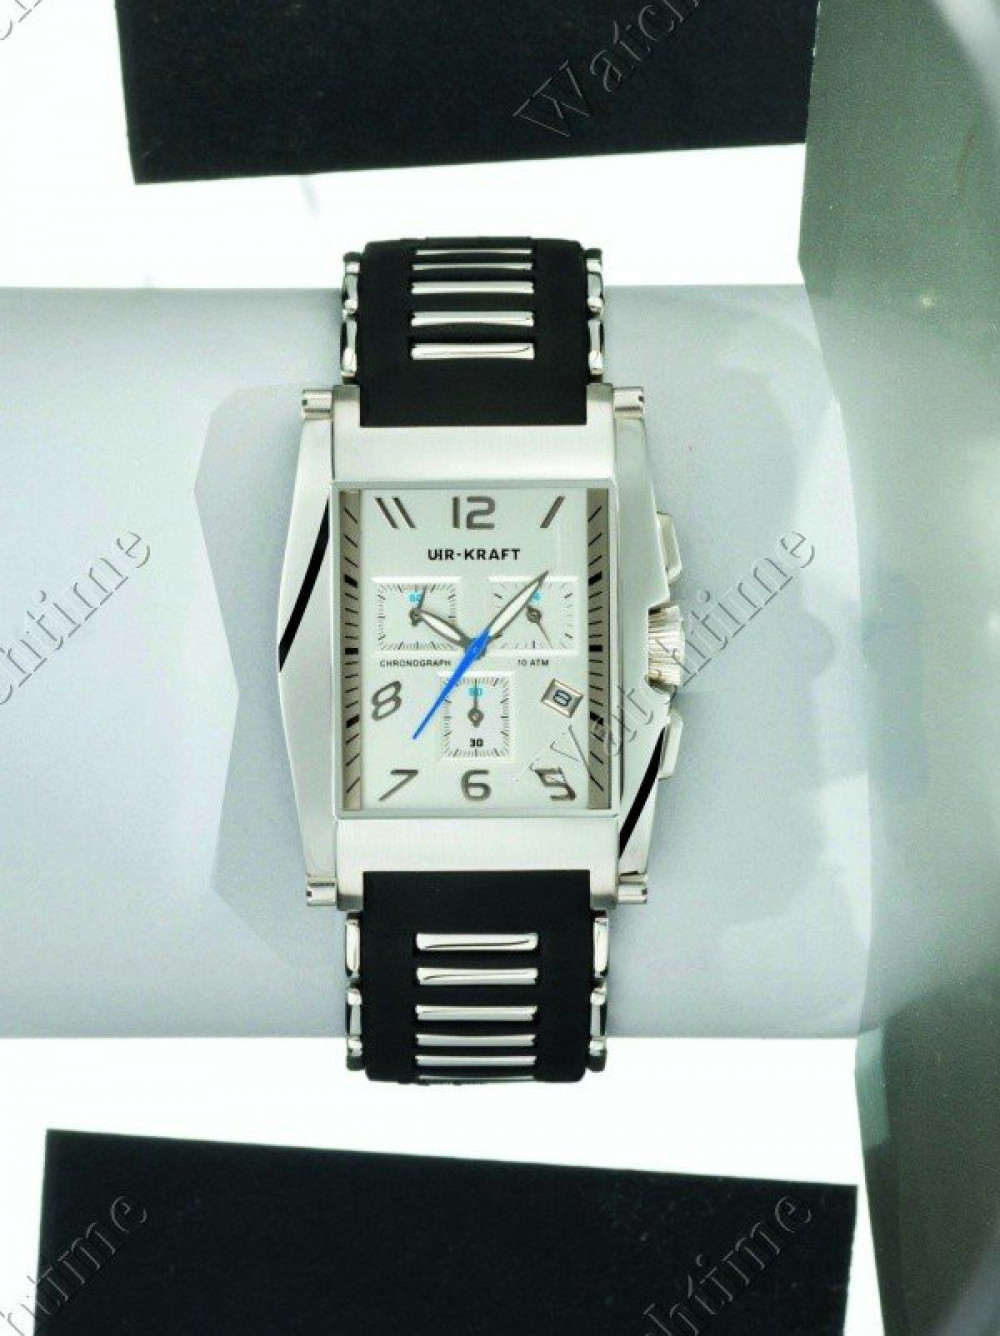 Zegarek firmy Uhr-Kraft, model Architect